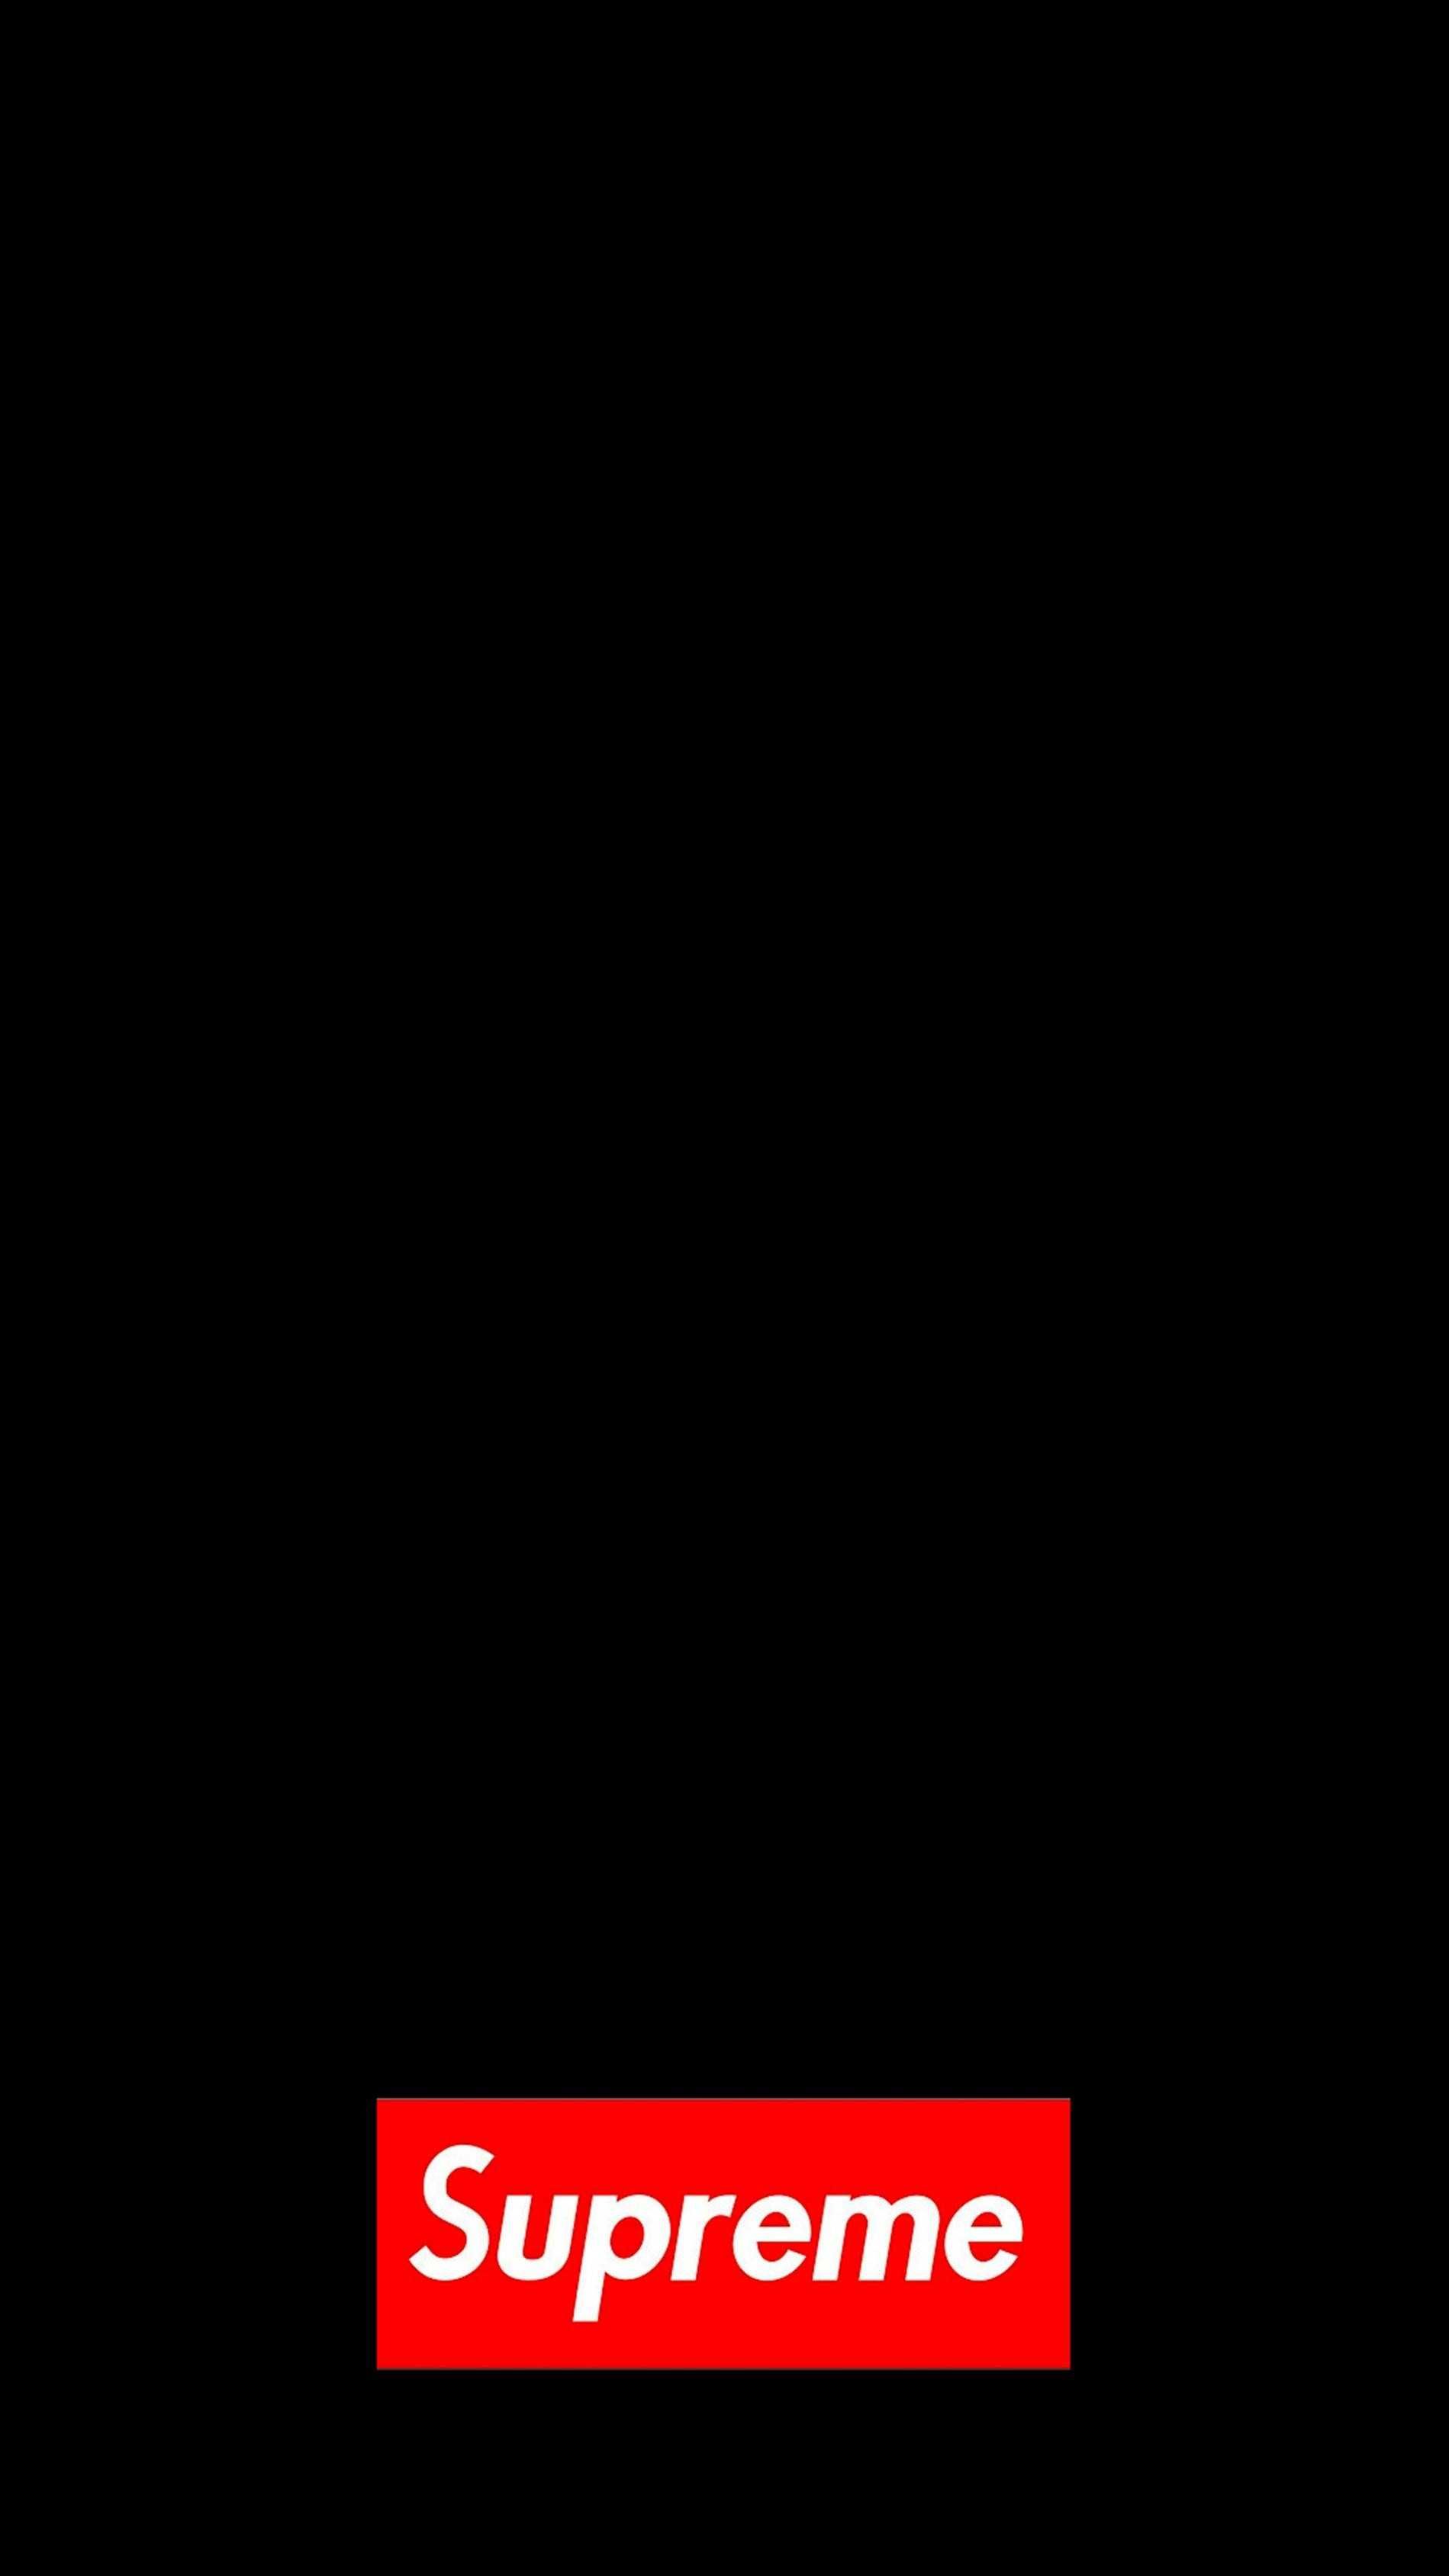 Supreme Wallpaper 4K, Logo, Black background, #10647